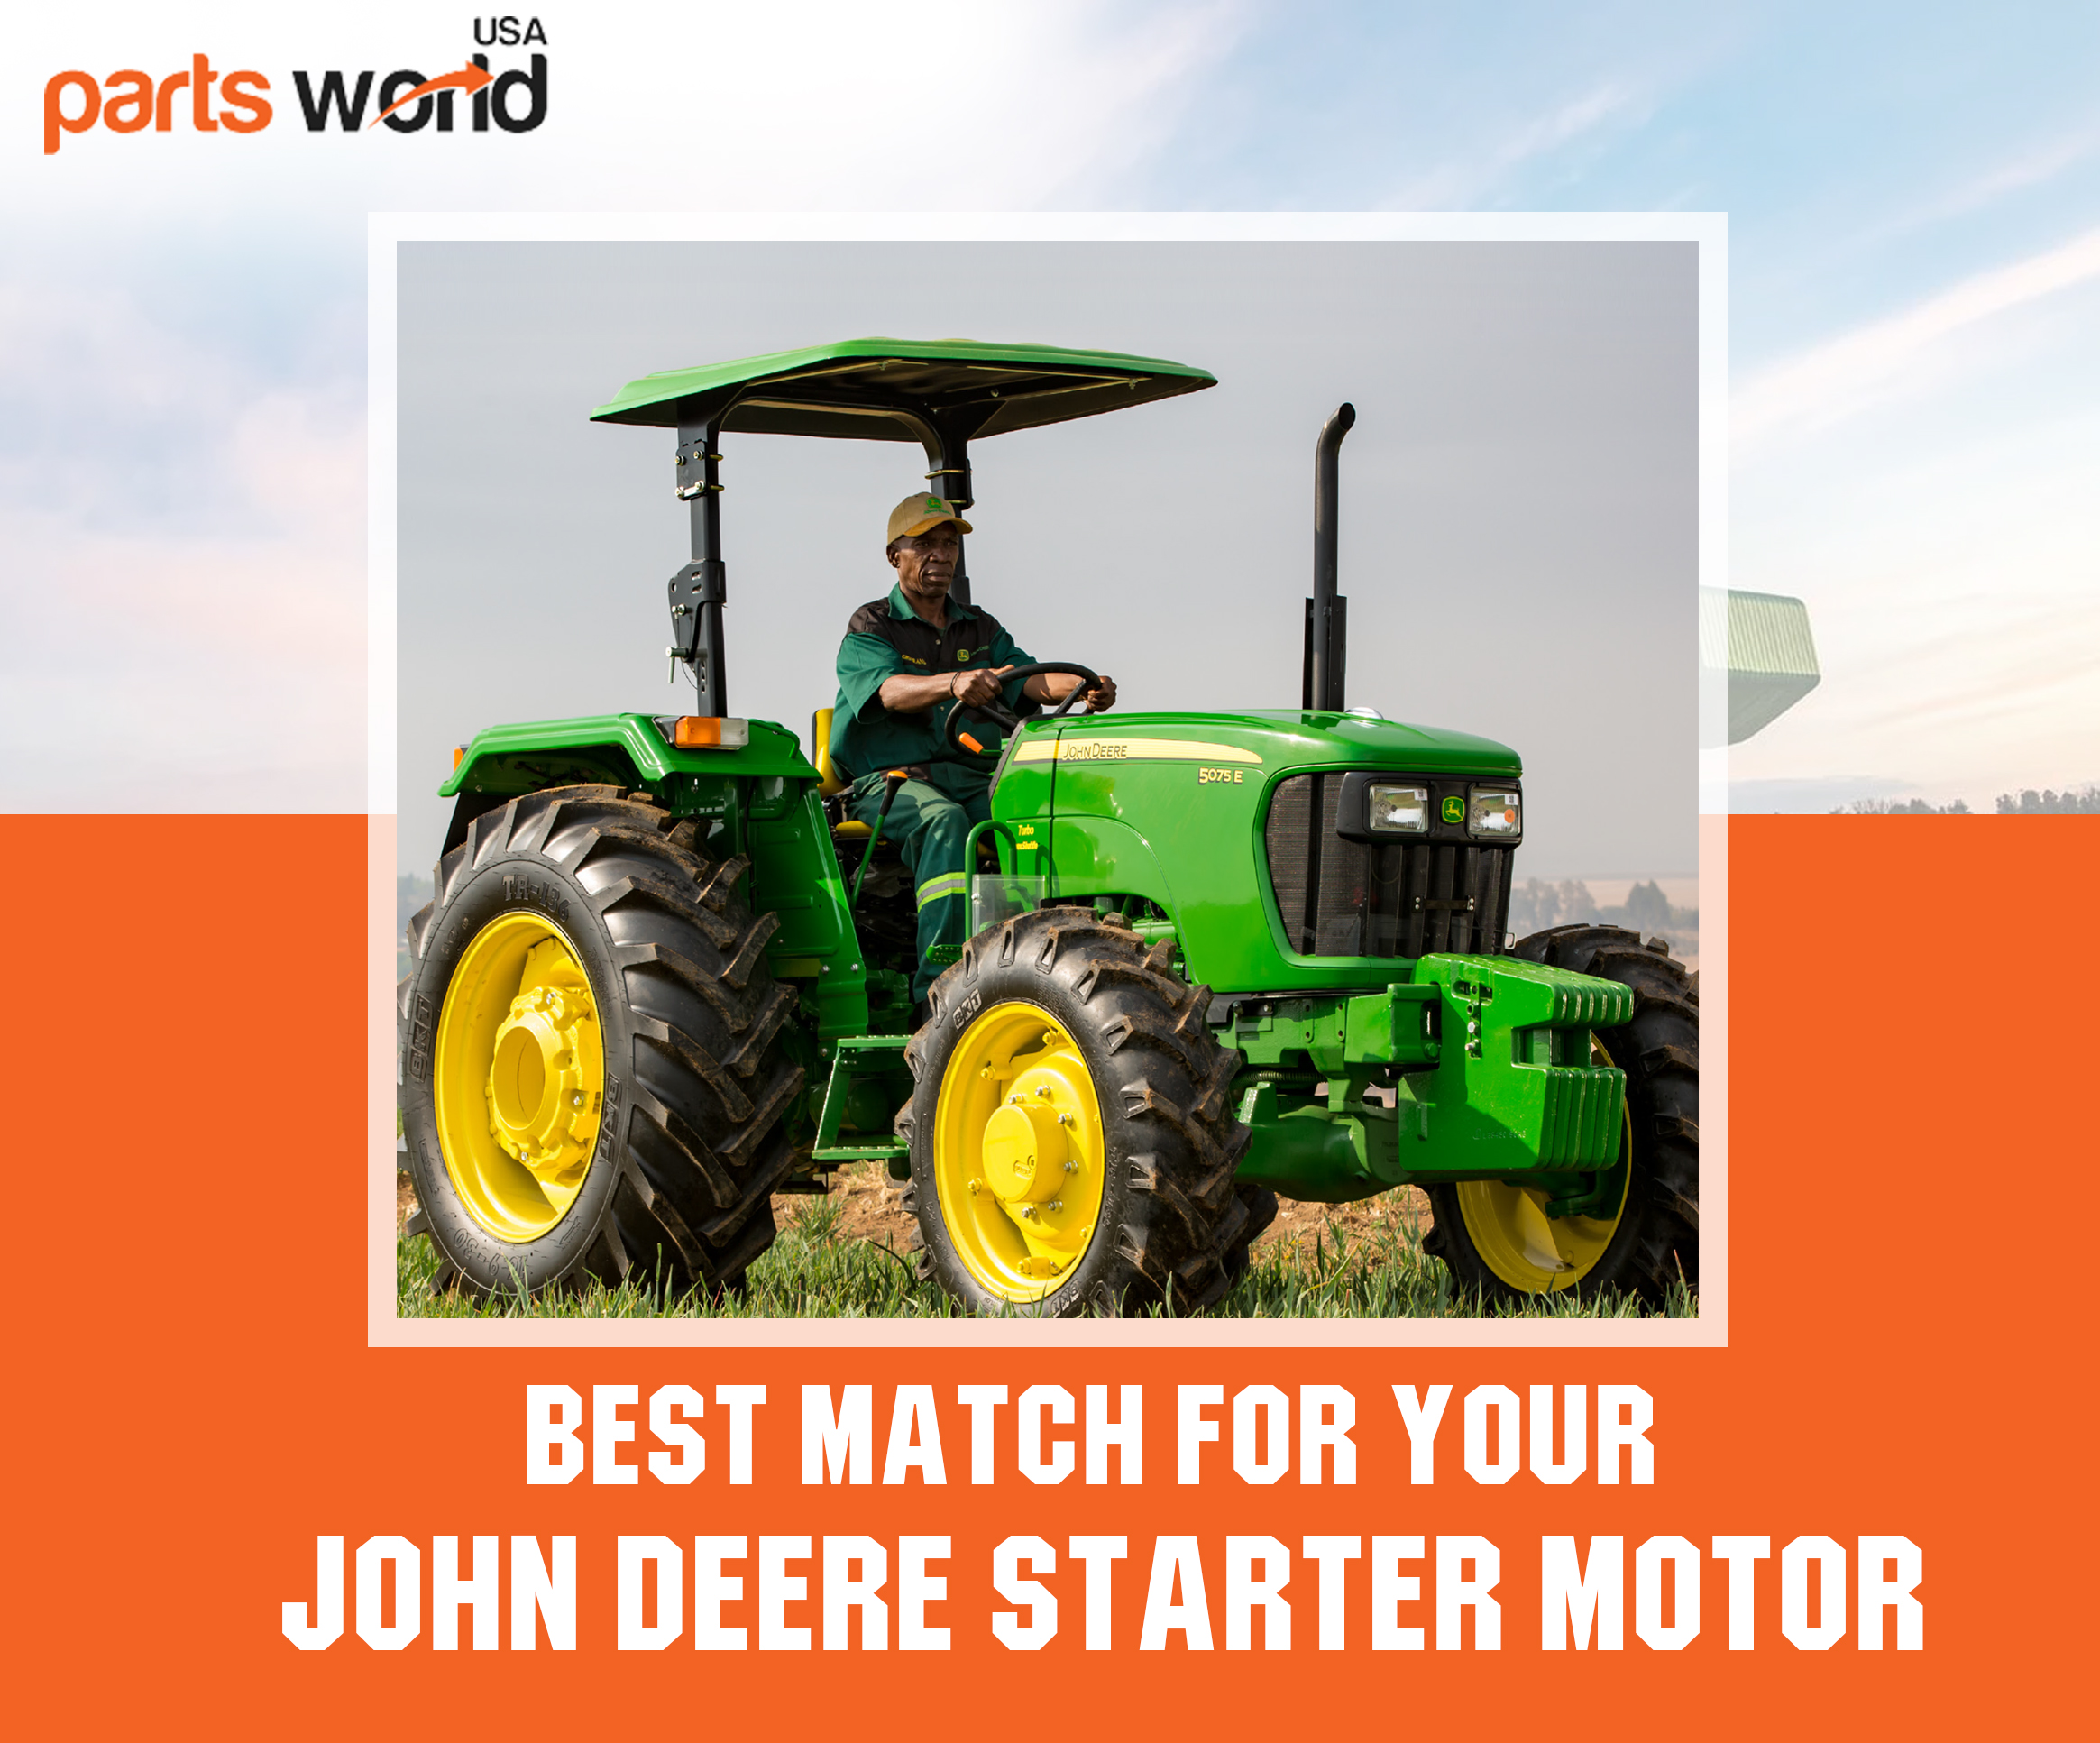 Looking for affordable John Deere Starter Motor - Buy Now!